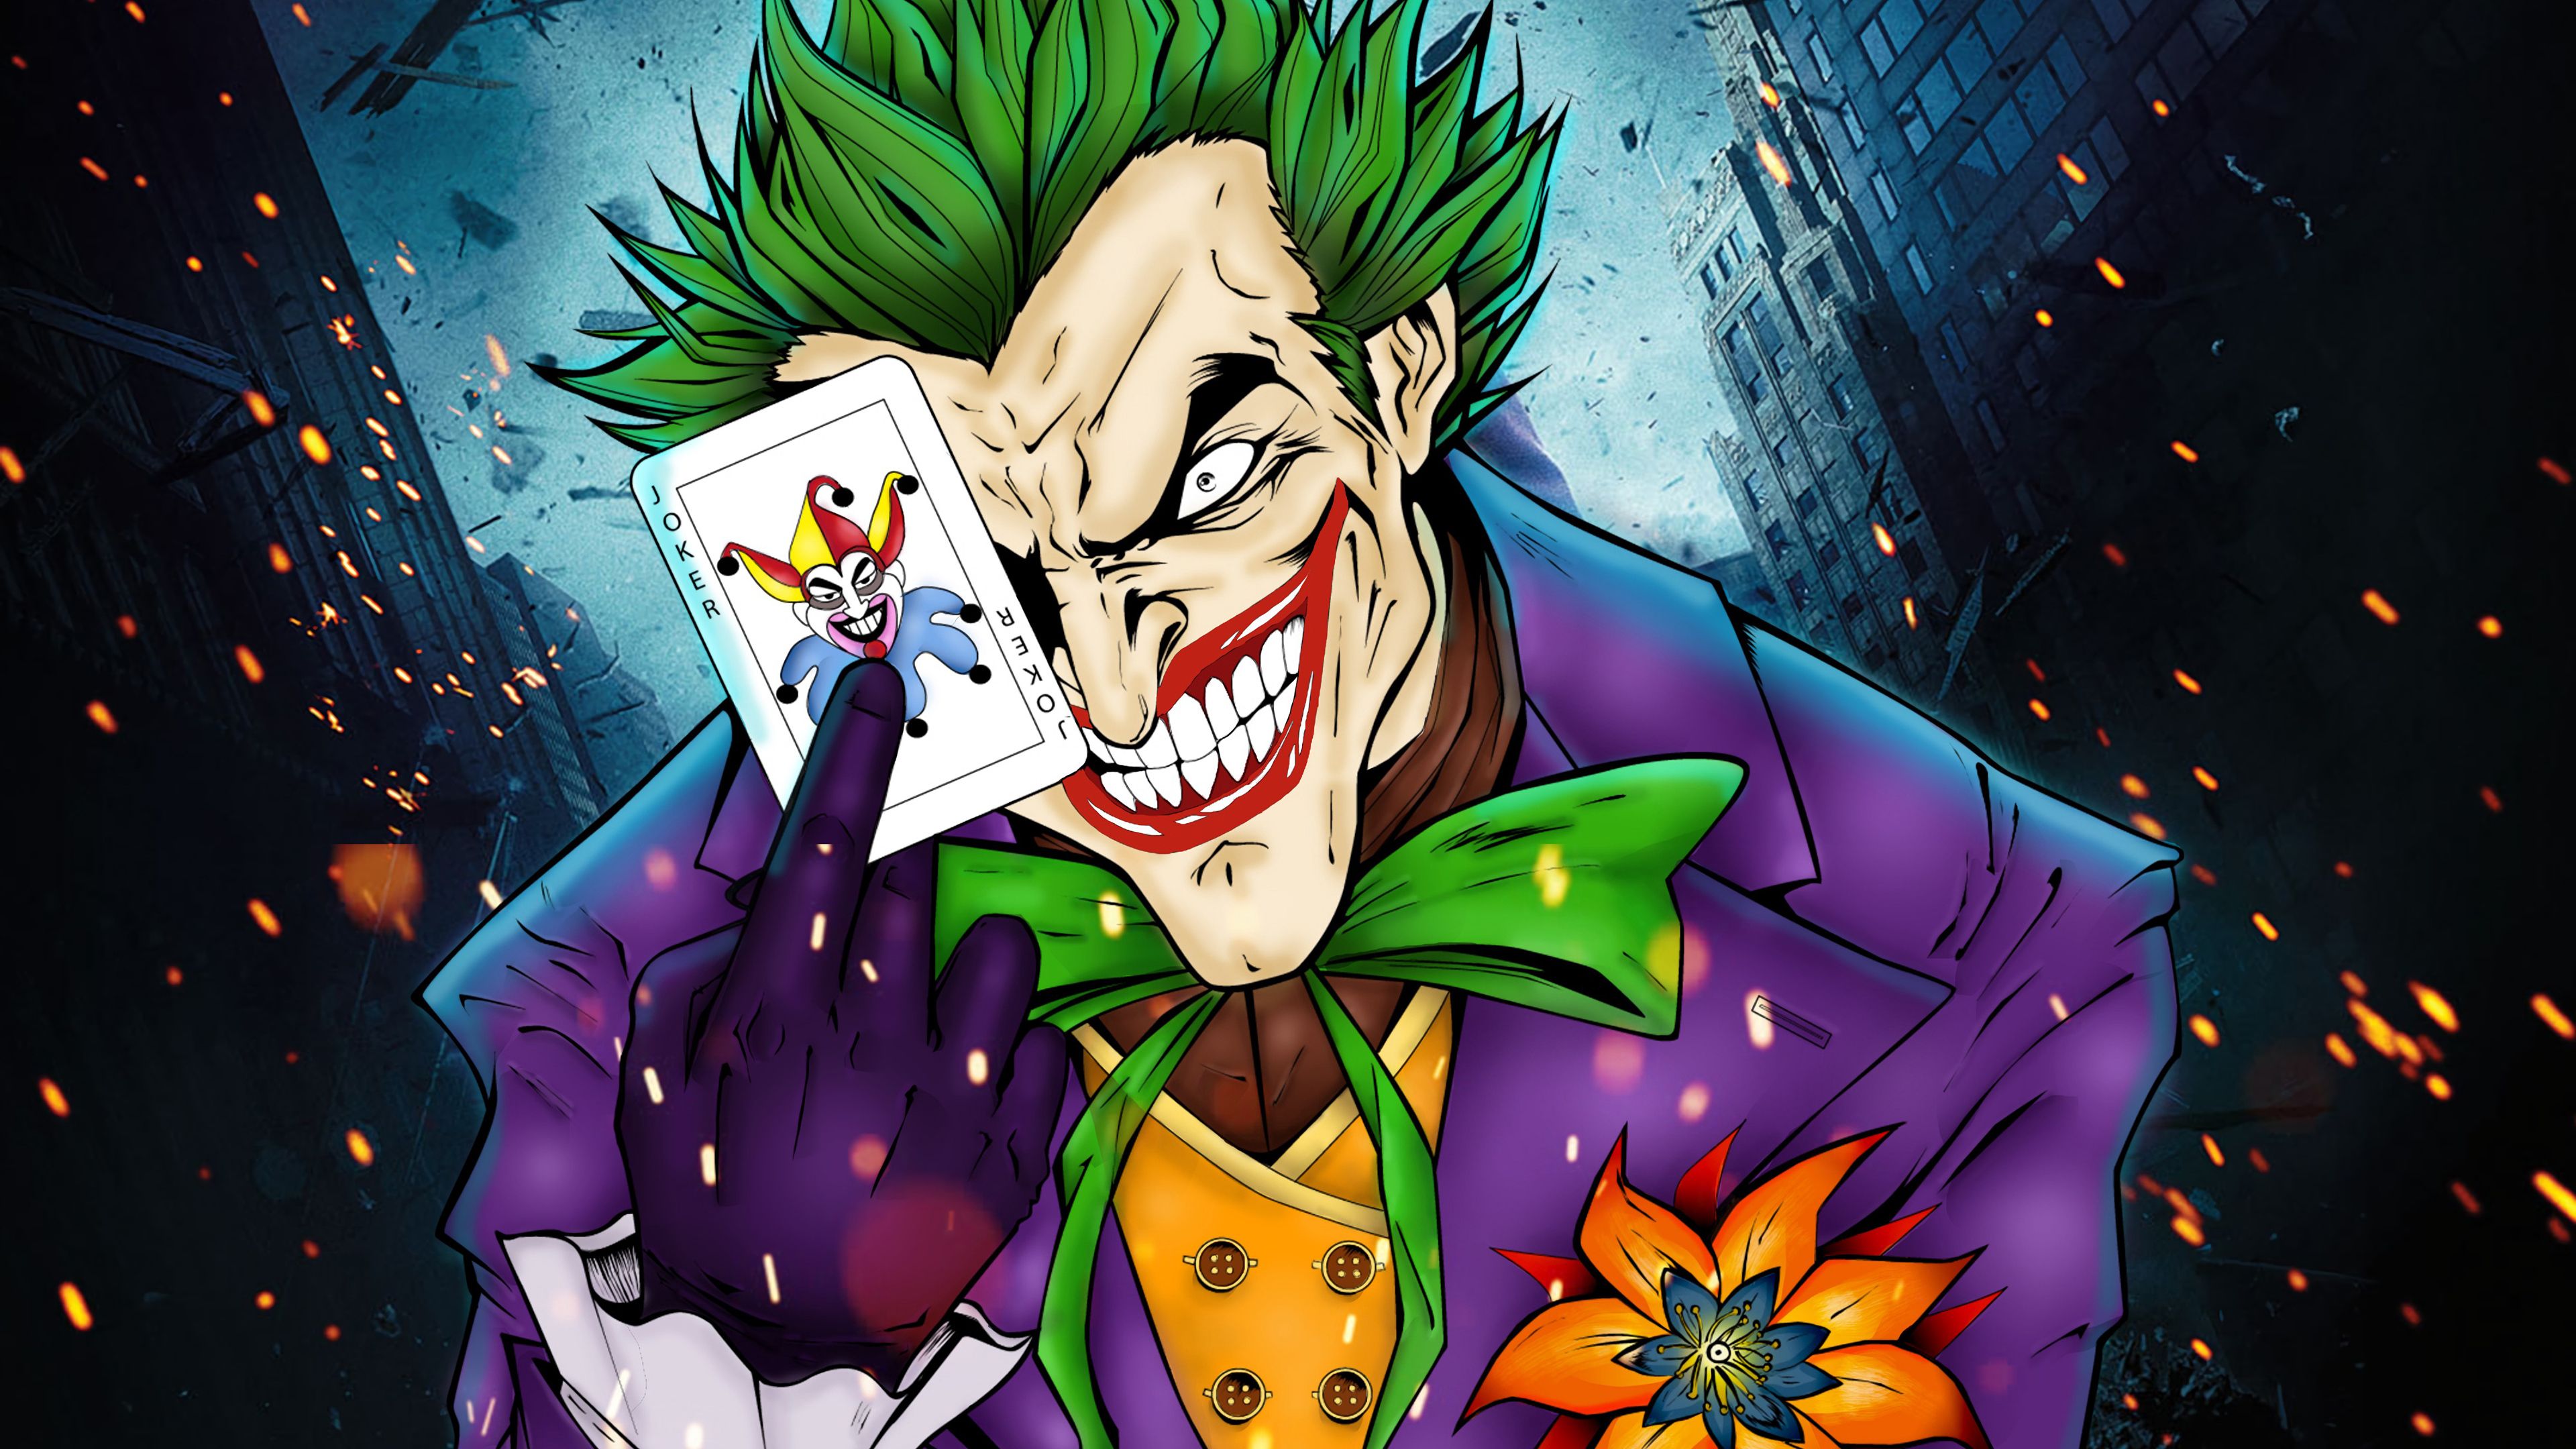 Joker flow biography